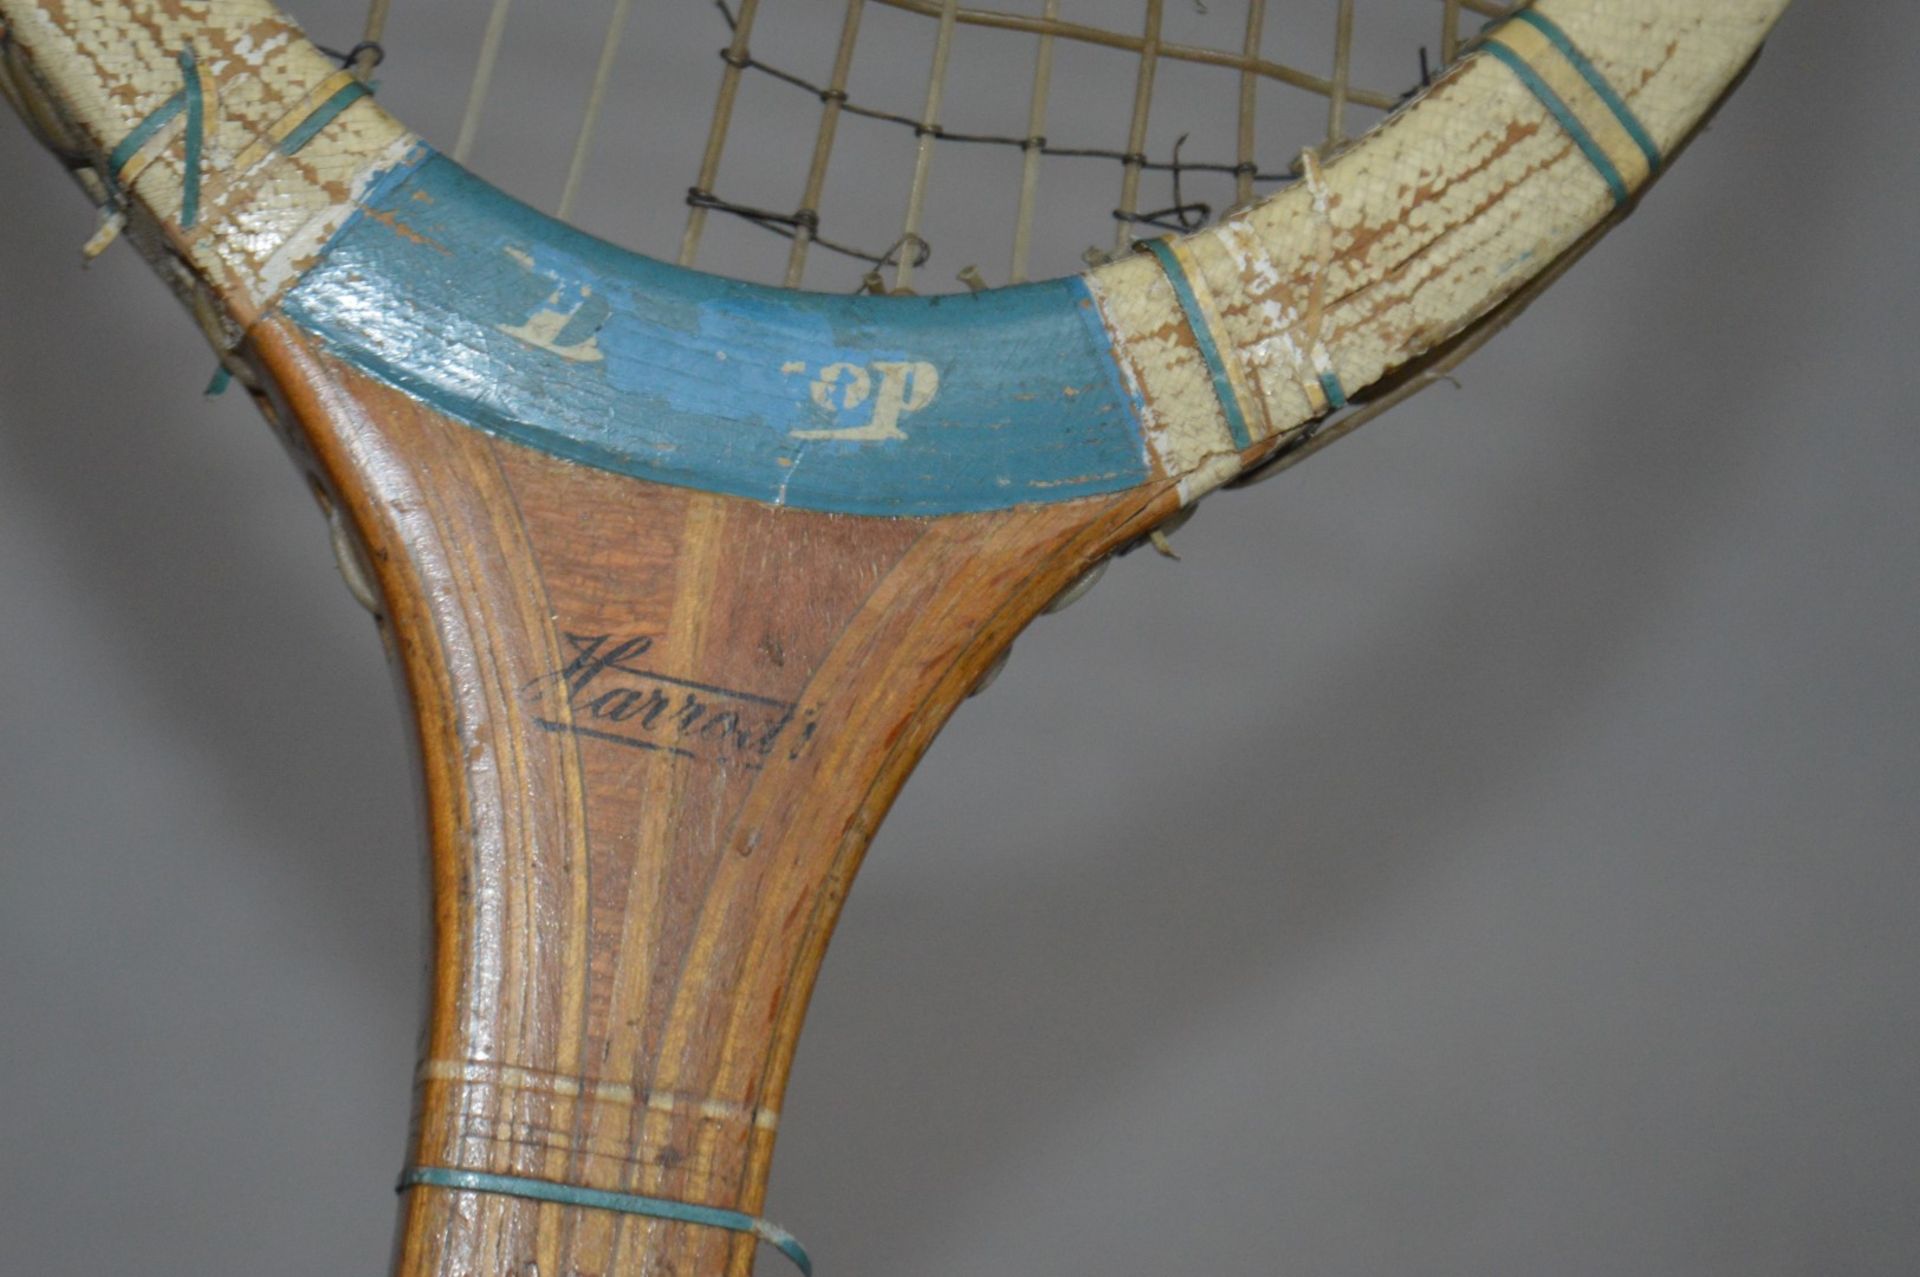 5 x Assorted Vintage Tennis Rackets - Ex-Display Props - Average Length: 69cm - Ref: HAR243 GIT - - Image 11 of 12